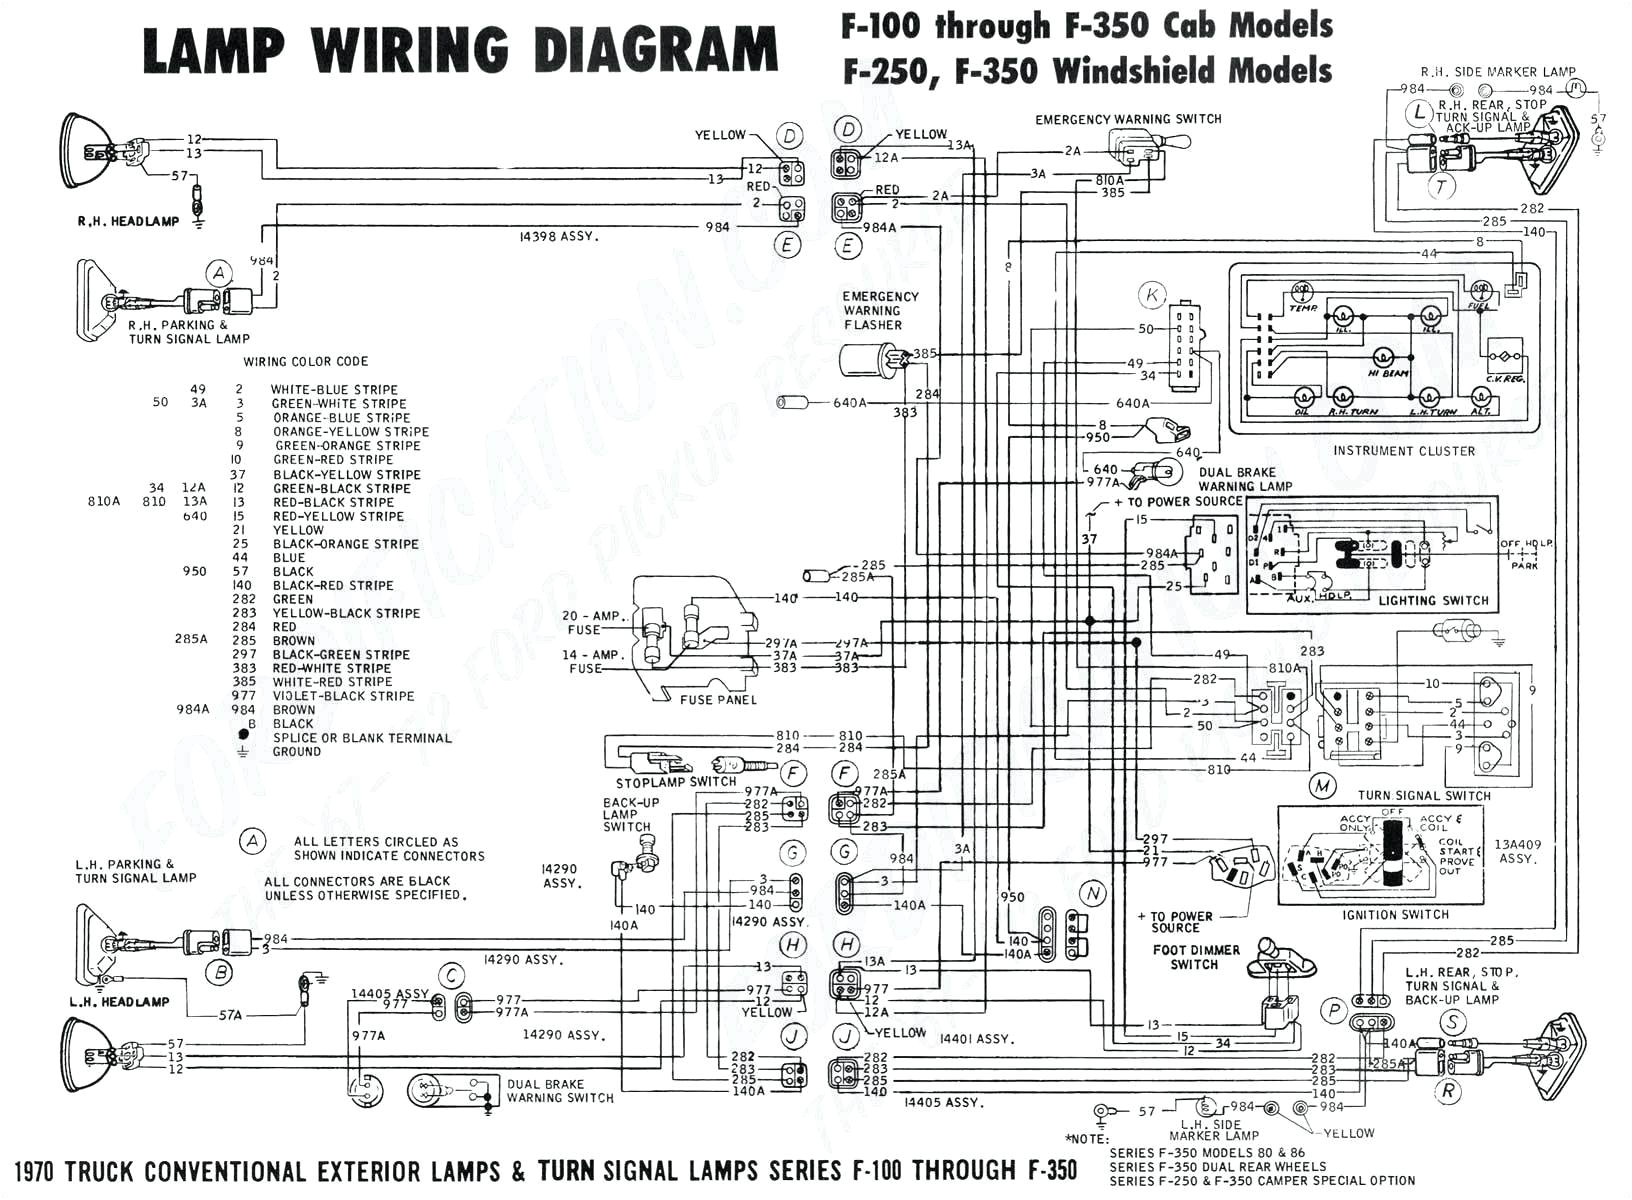 Dodge Stratus Wiring Diagram 2005 Dodge 2500 Wiring Diagram Wiring Diagram Database